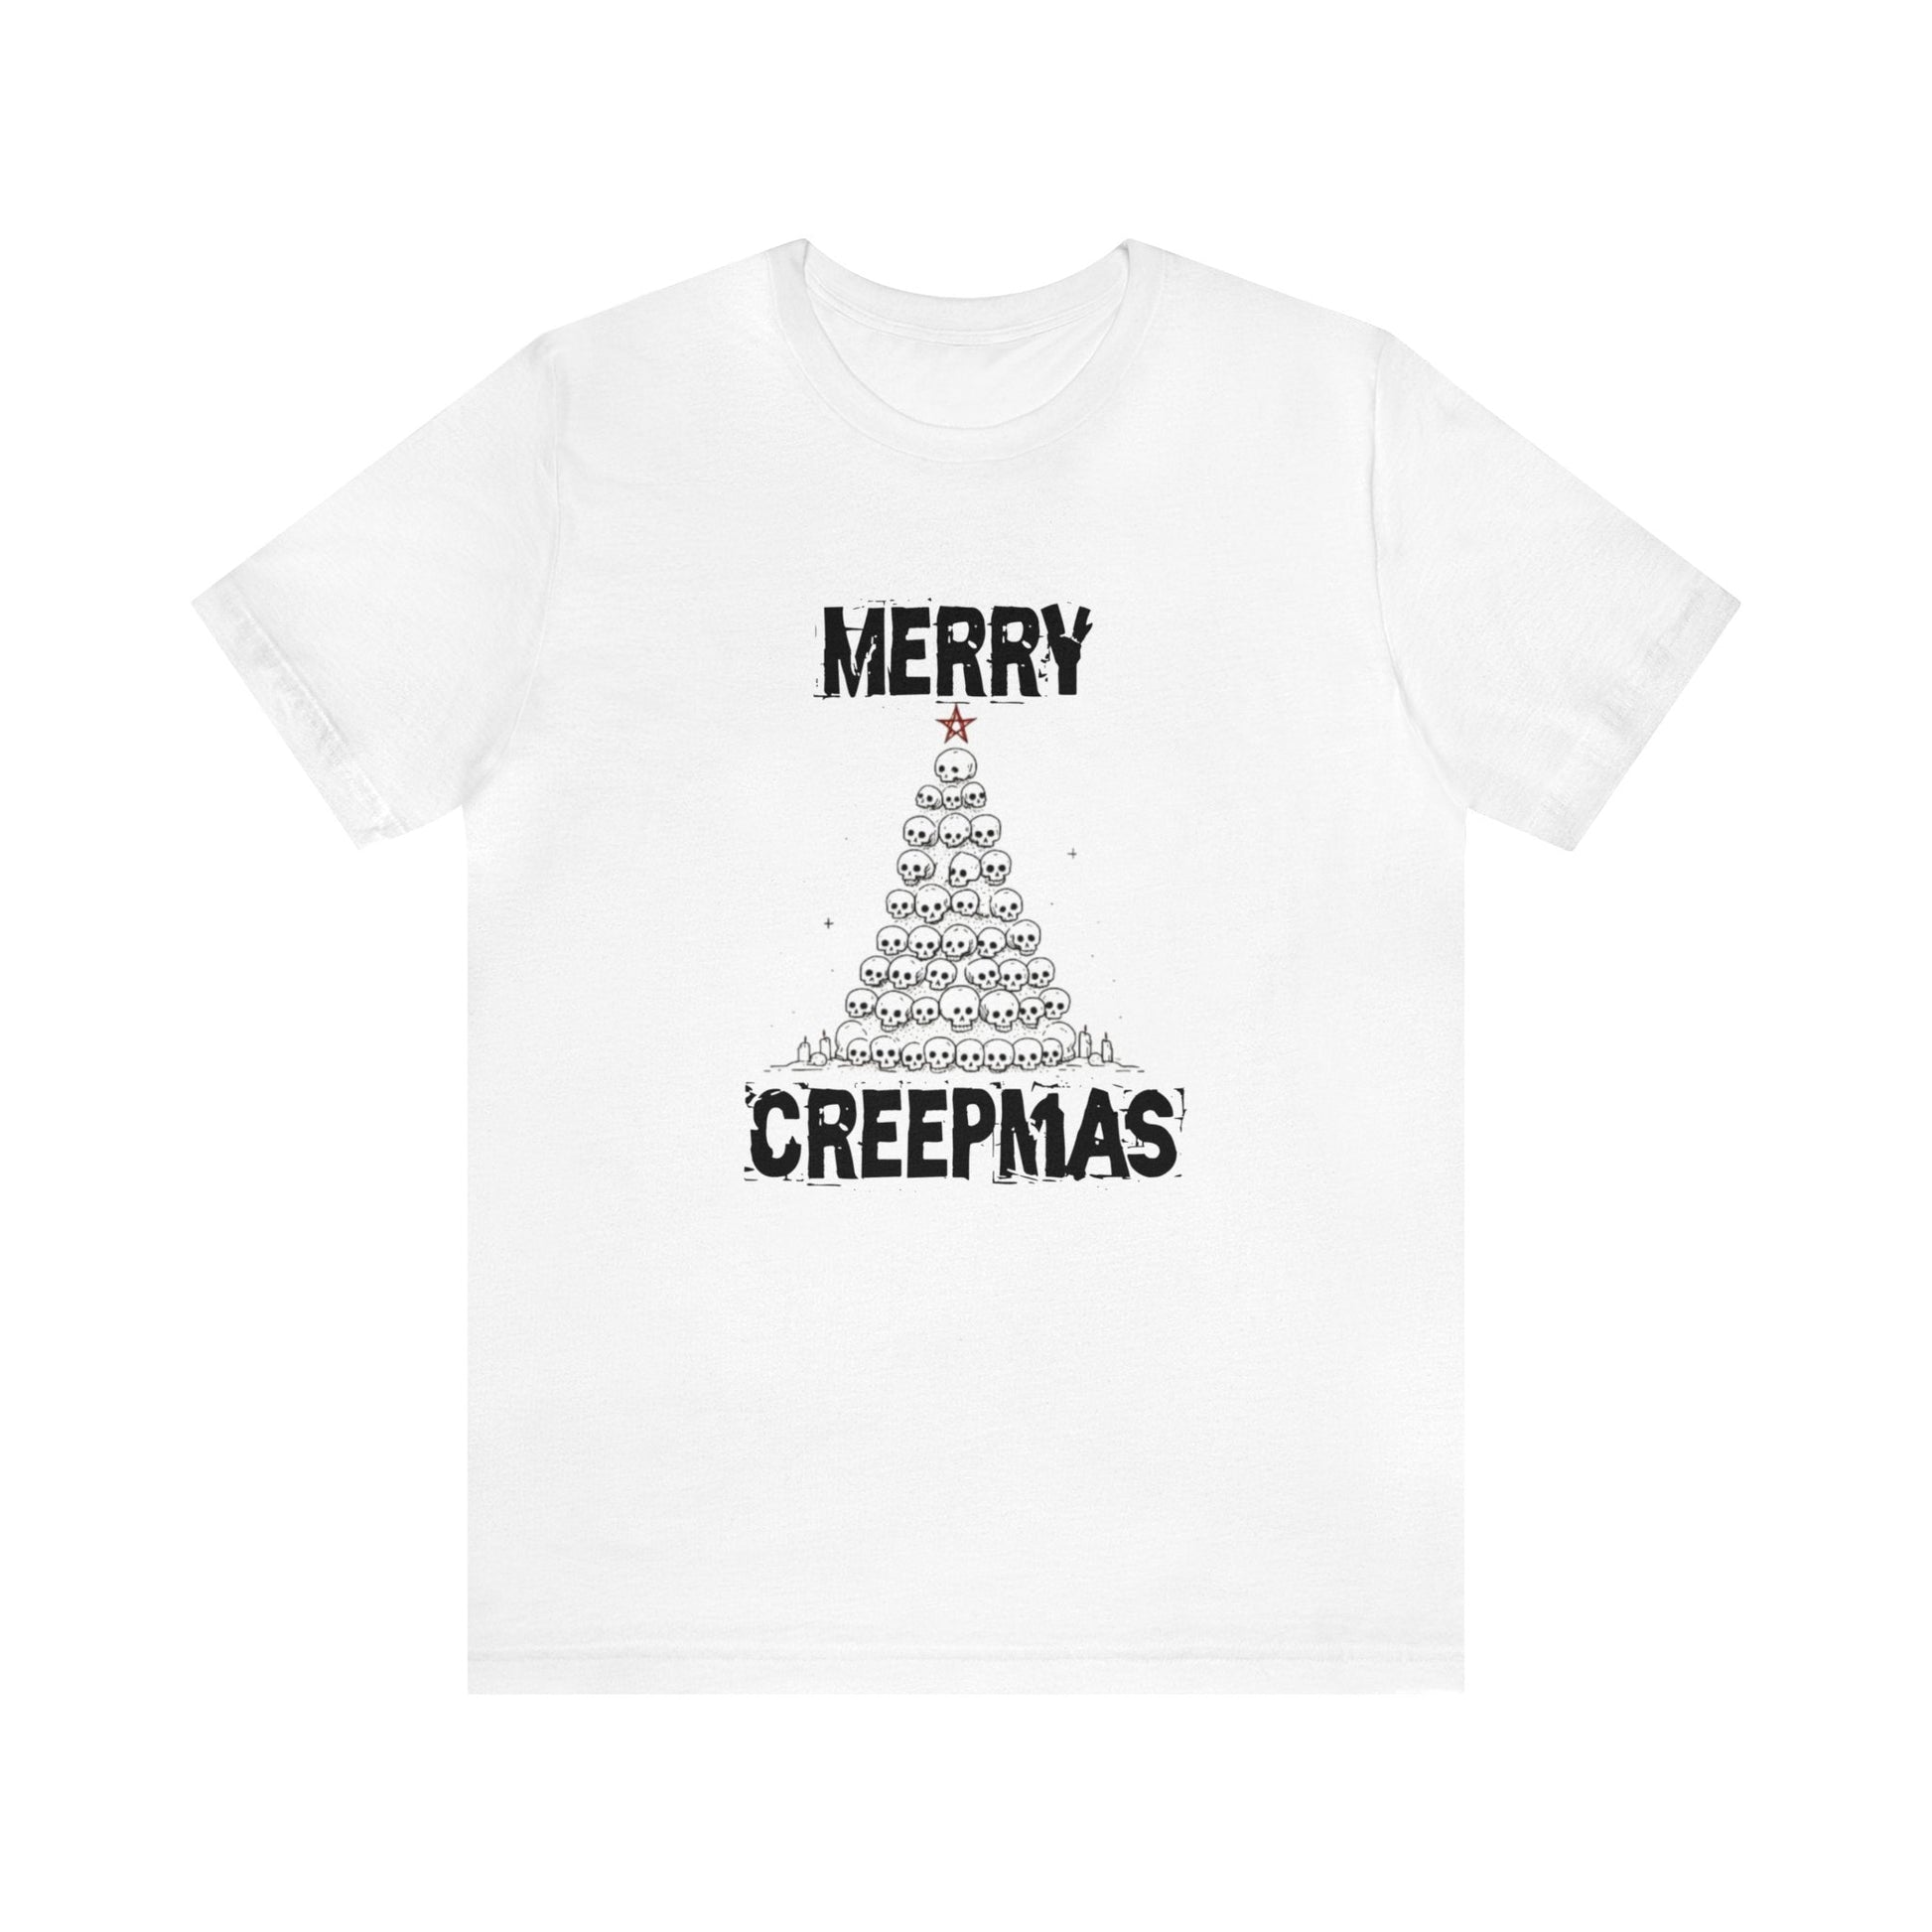 Merry Creepmas Short Sleeve Tee ShirtT - ShirtVTZdesignsWhiteXSchristmasclothingCotton